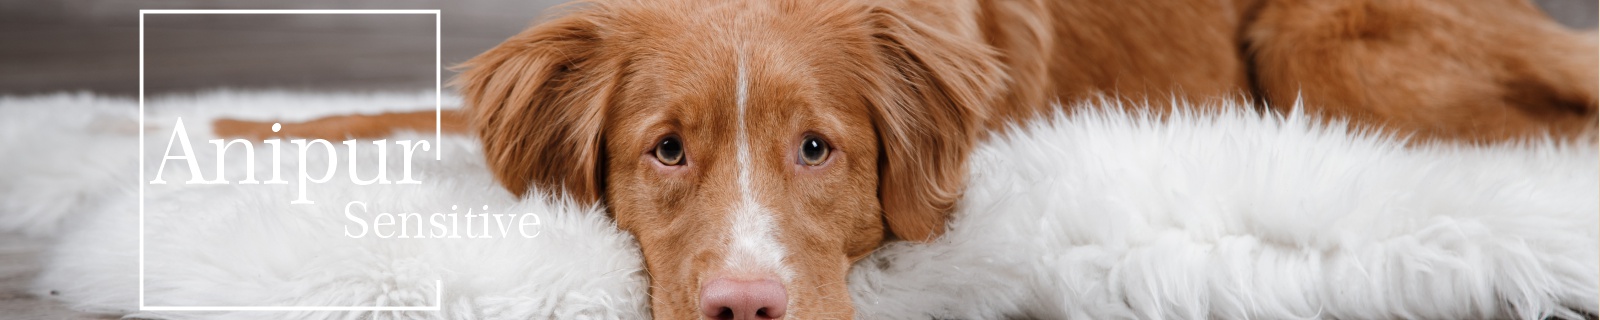 Sensitives Hundefutter für empfindliche Hunde Anipur